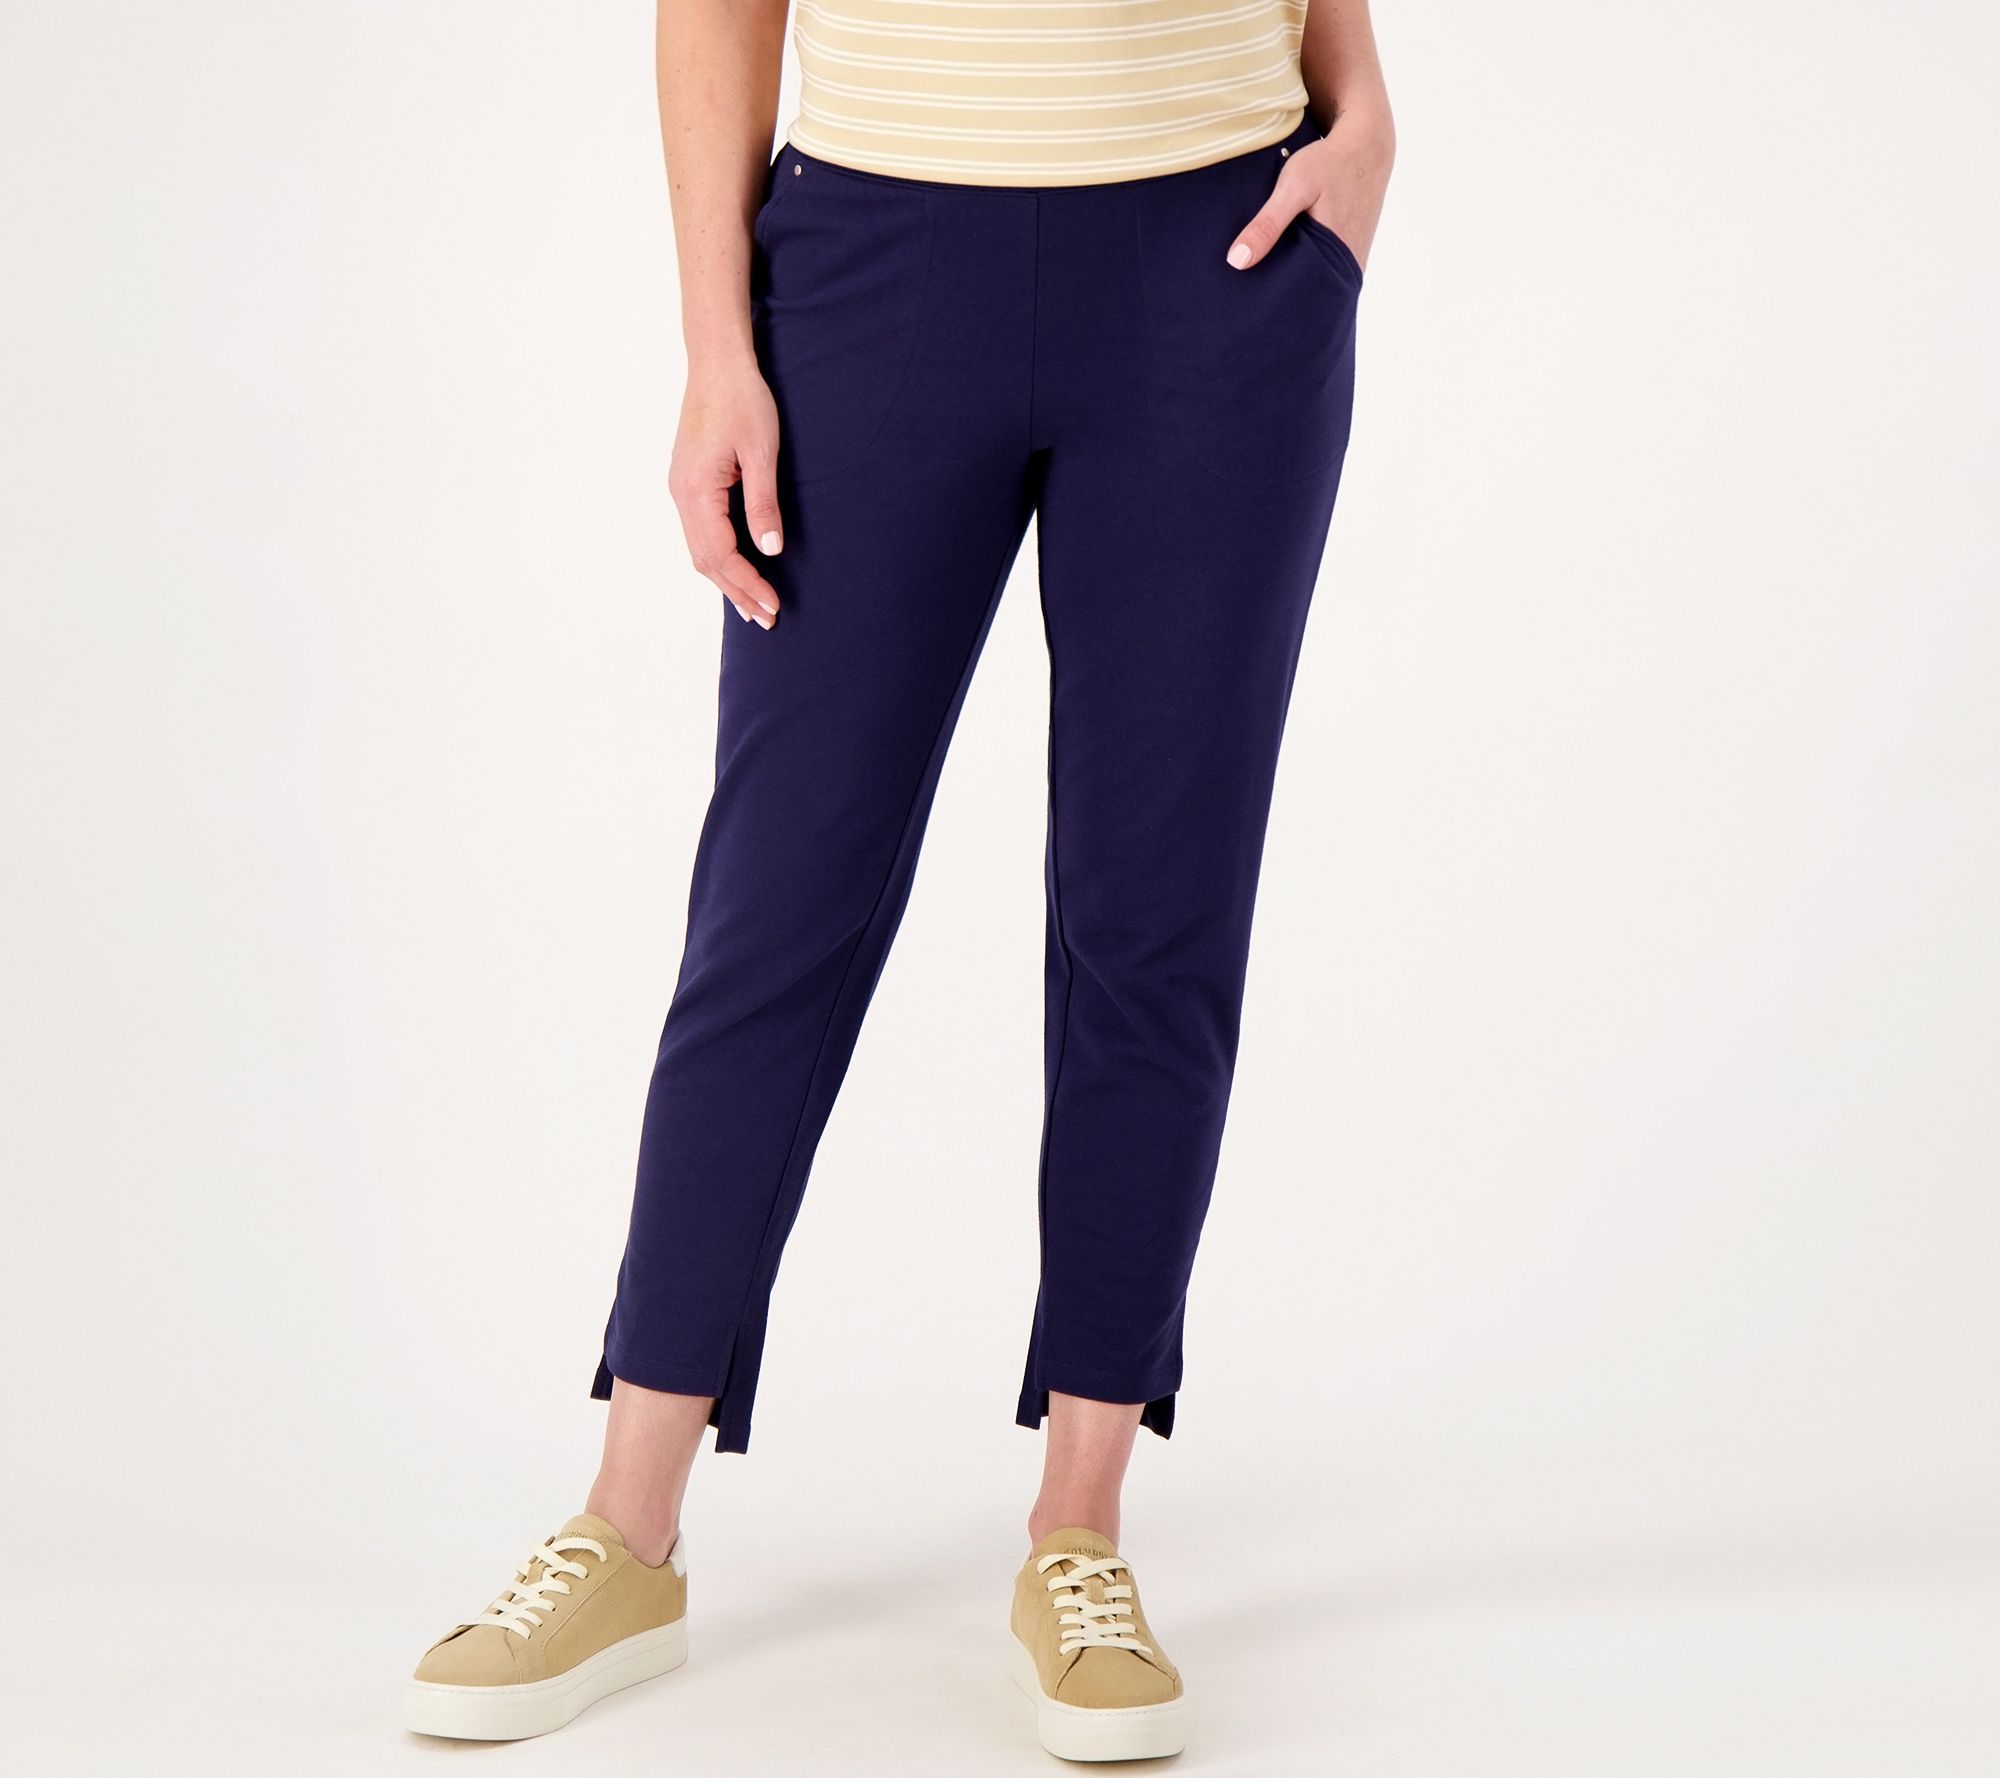  Cotton Yoga Pants for Women Tall Length Yoga Sports